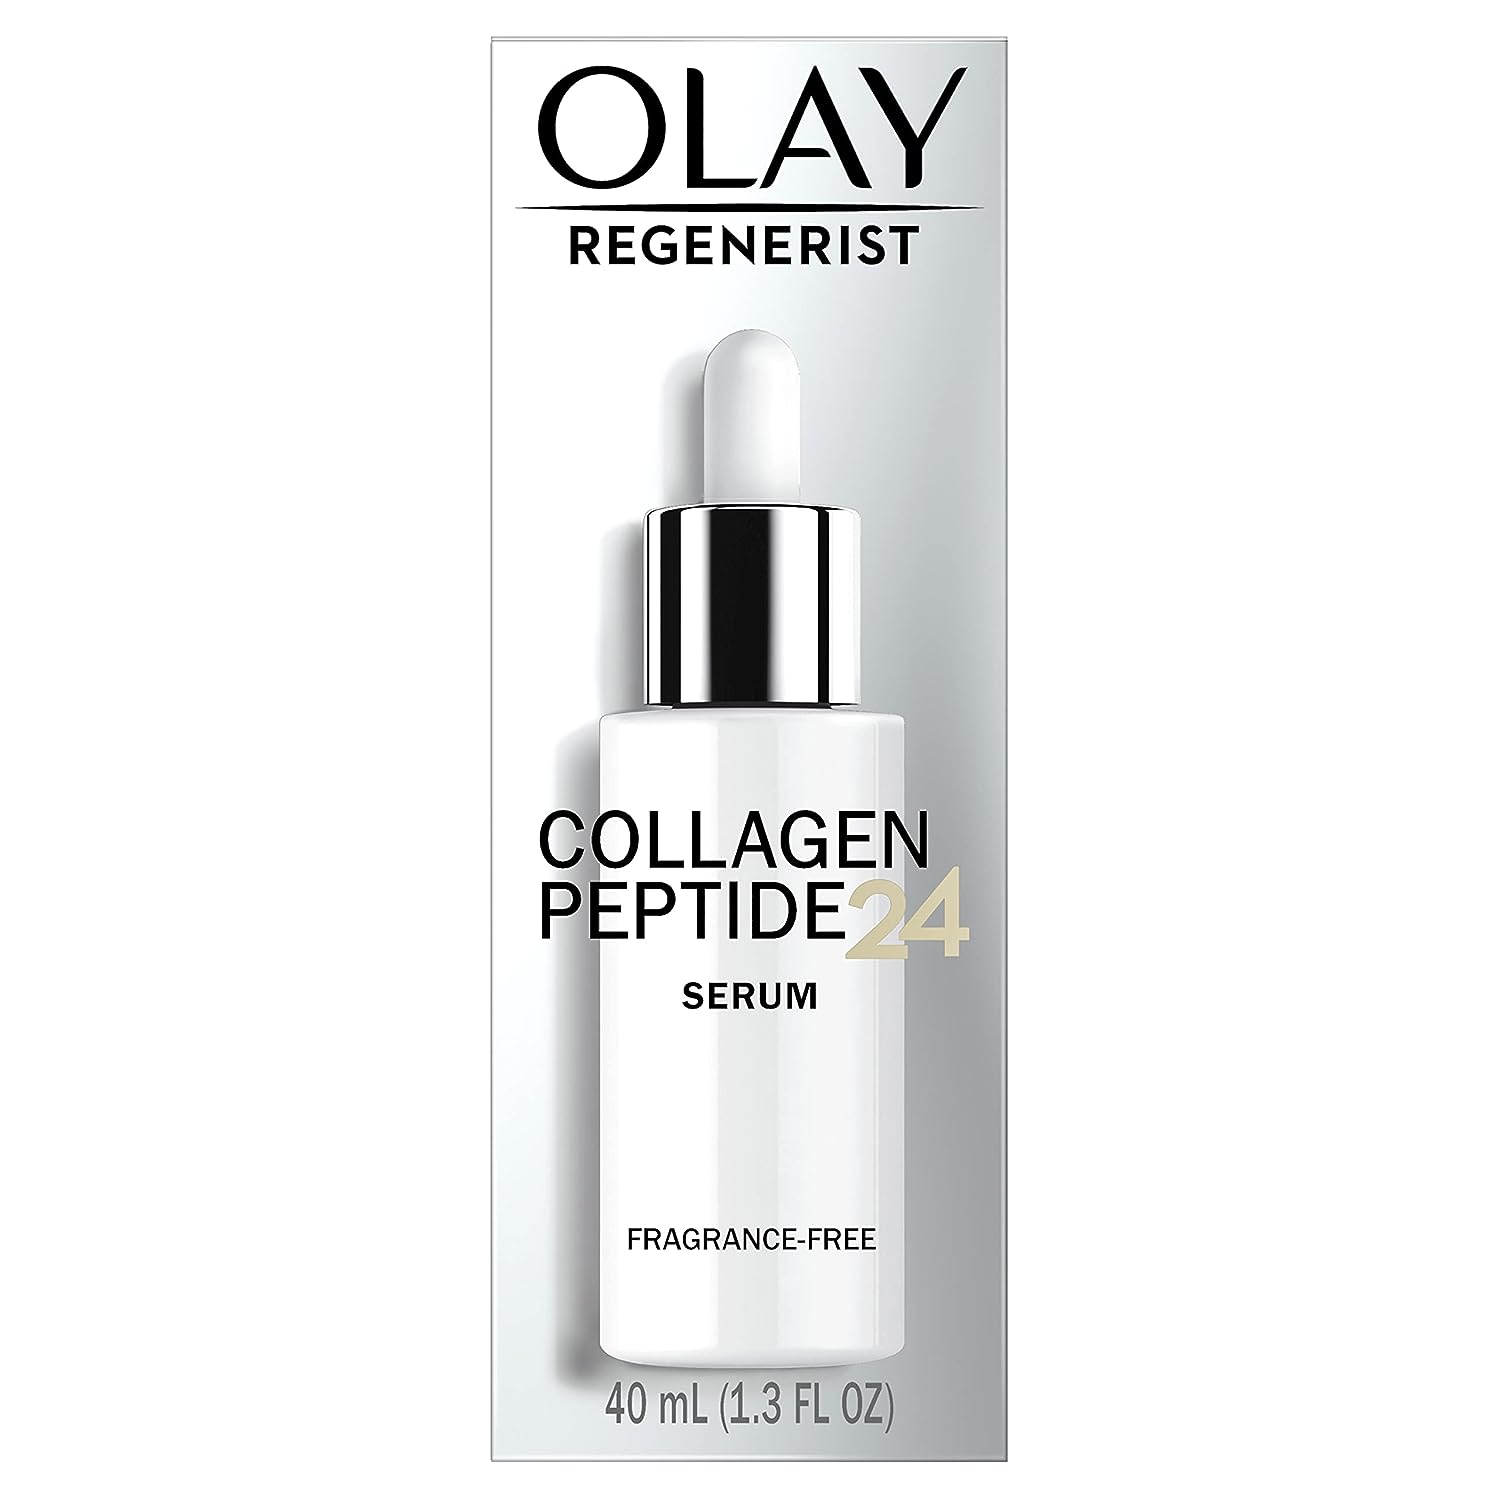 Olay Regenerist Collagen Peptide 24 Serum, Fragrance-Free, 1.3